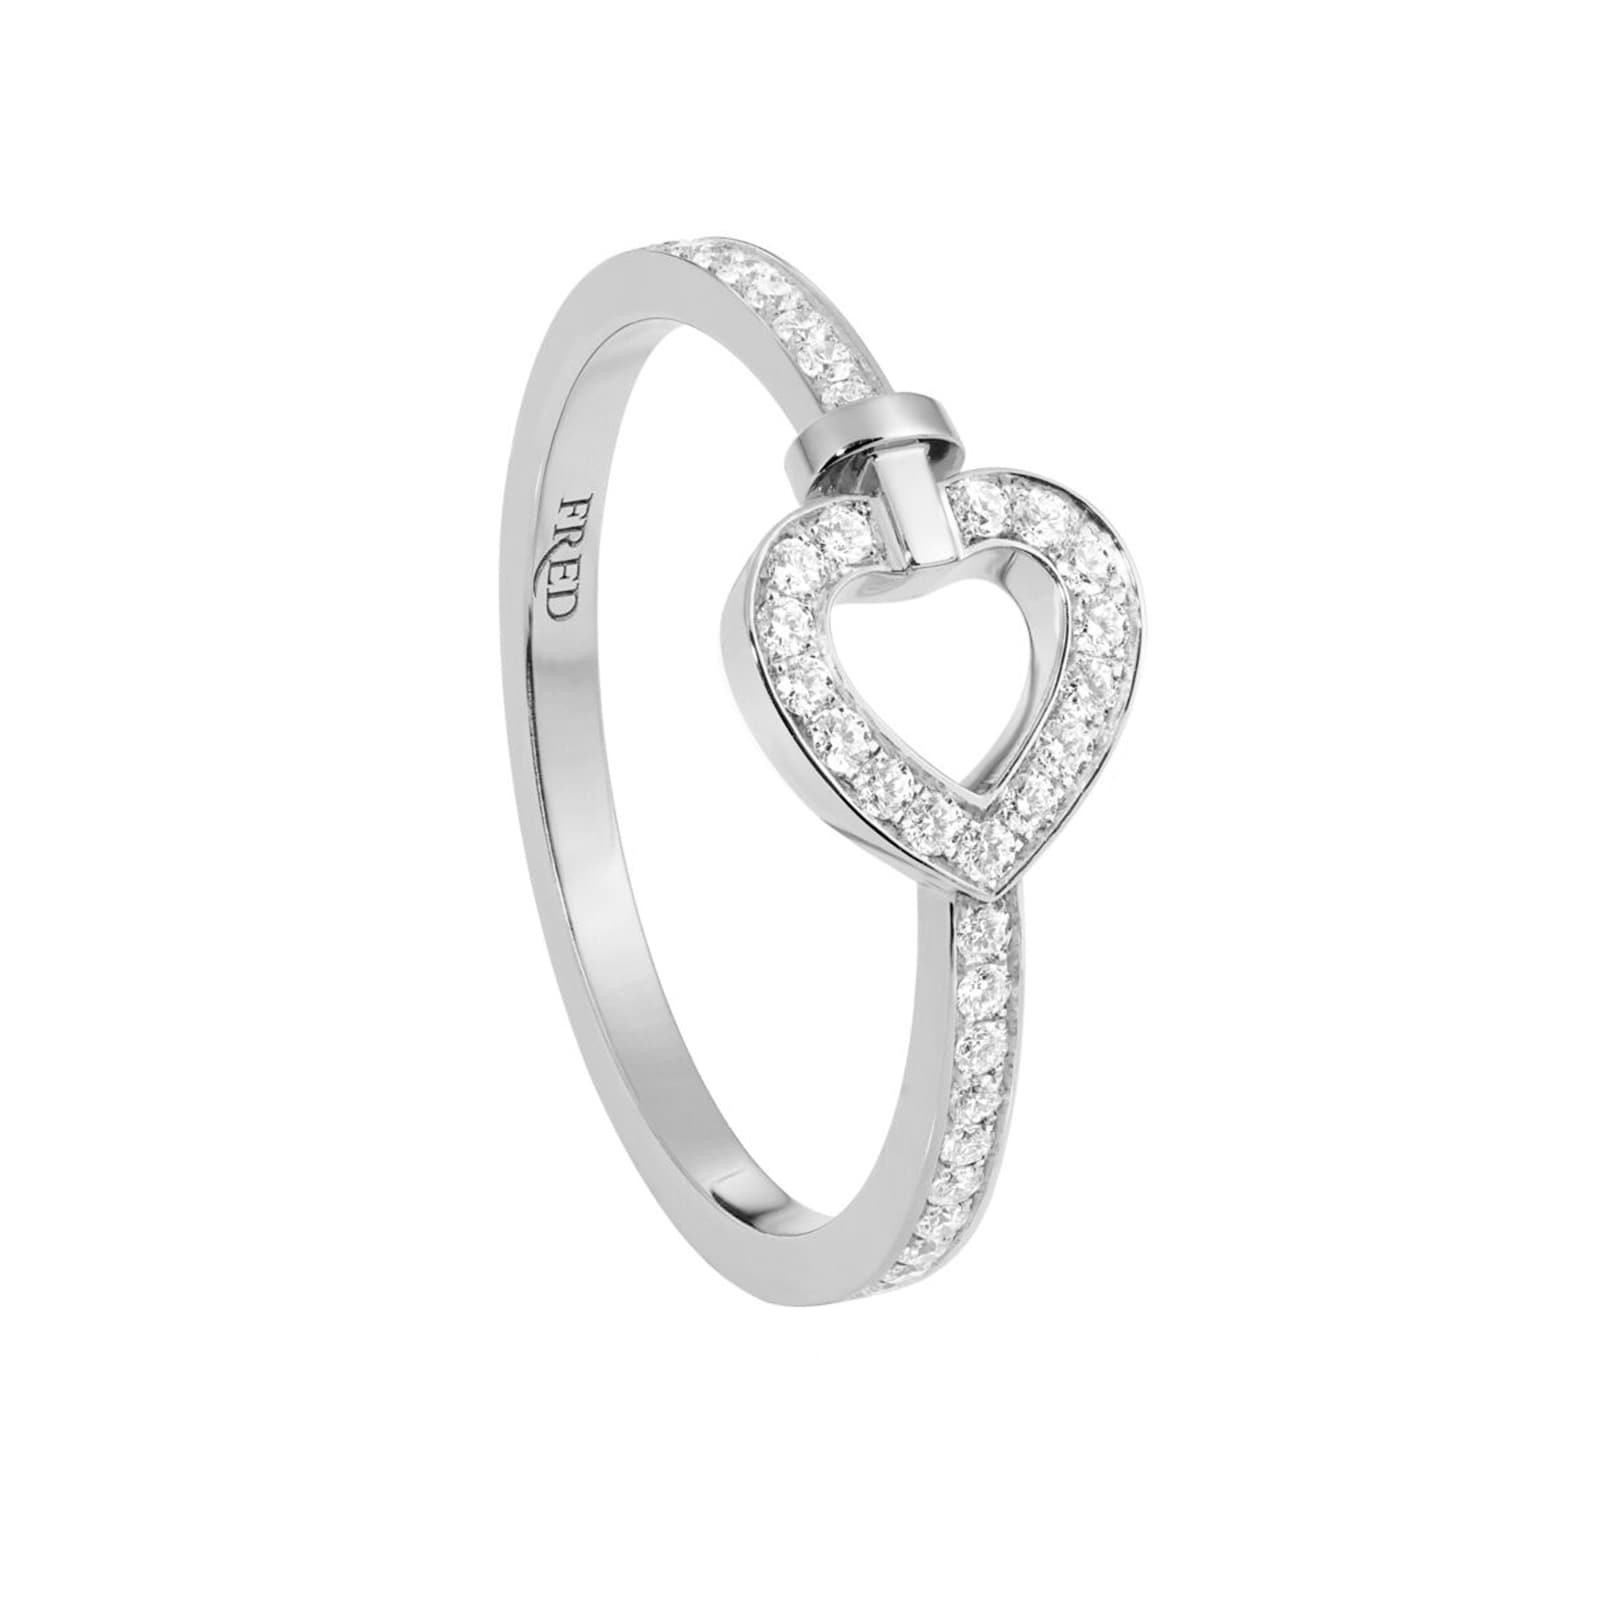 Pretty Woman 18ct White Gold 0.21ct Diamond Ring - Ring Size M